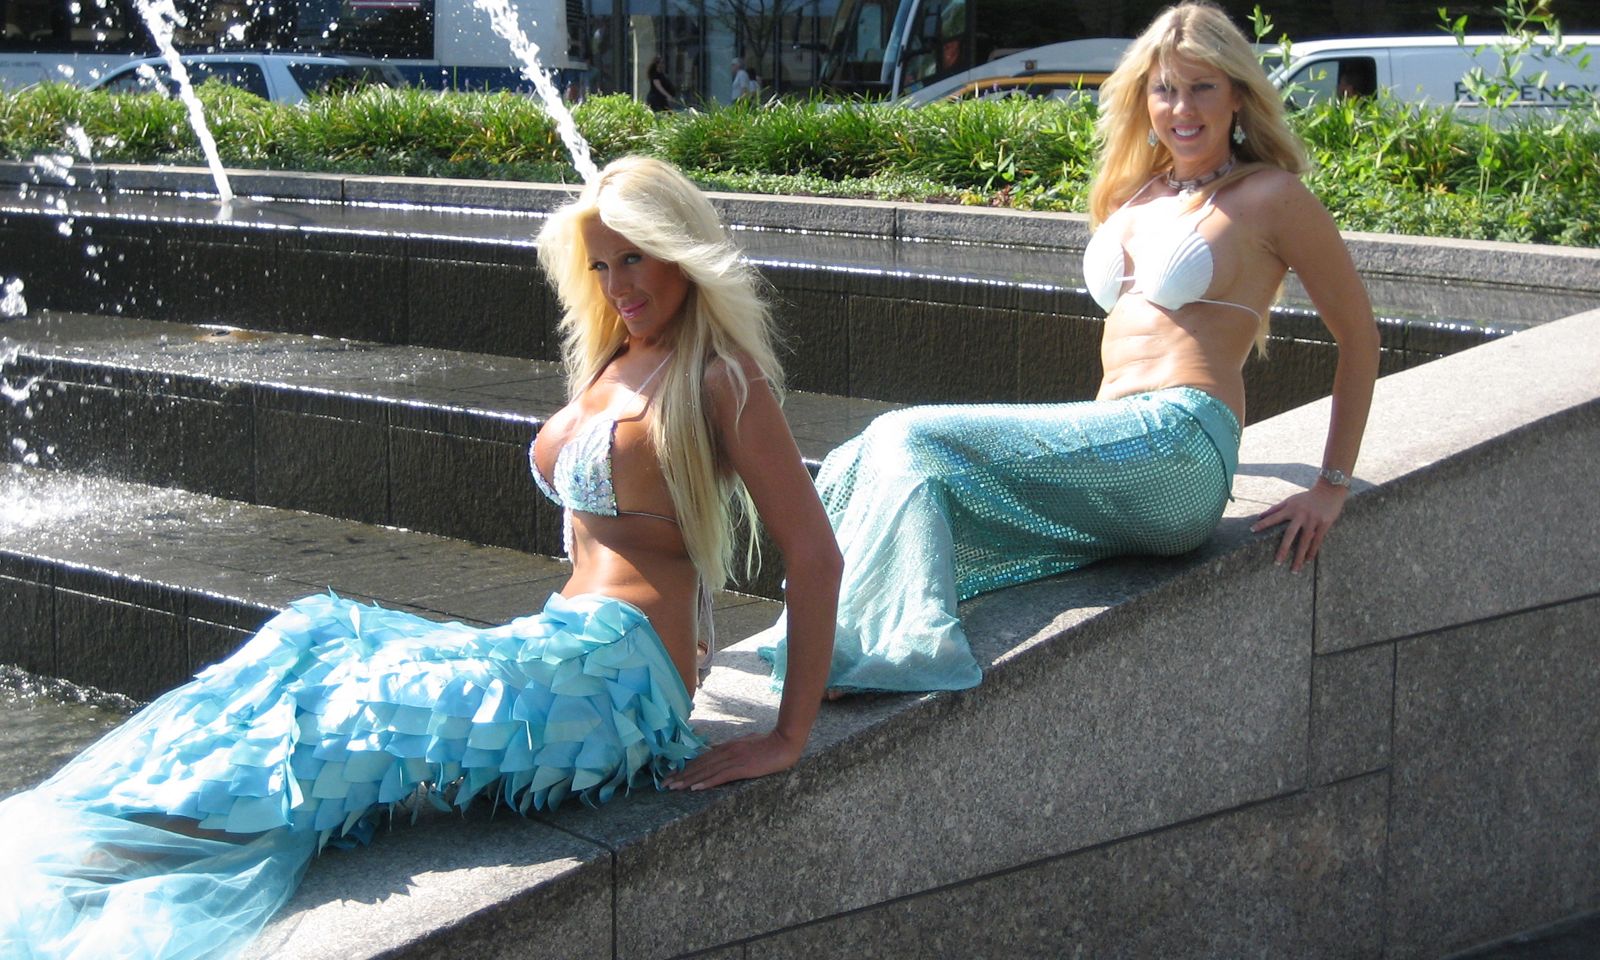 Centerfold Strips’ Mermaids Make A Splash in NYC